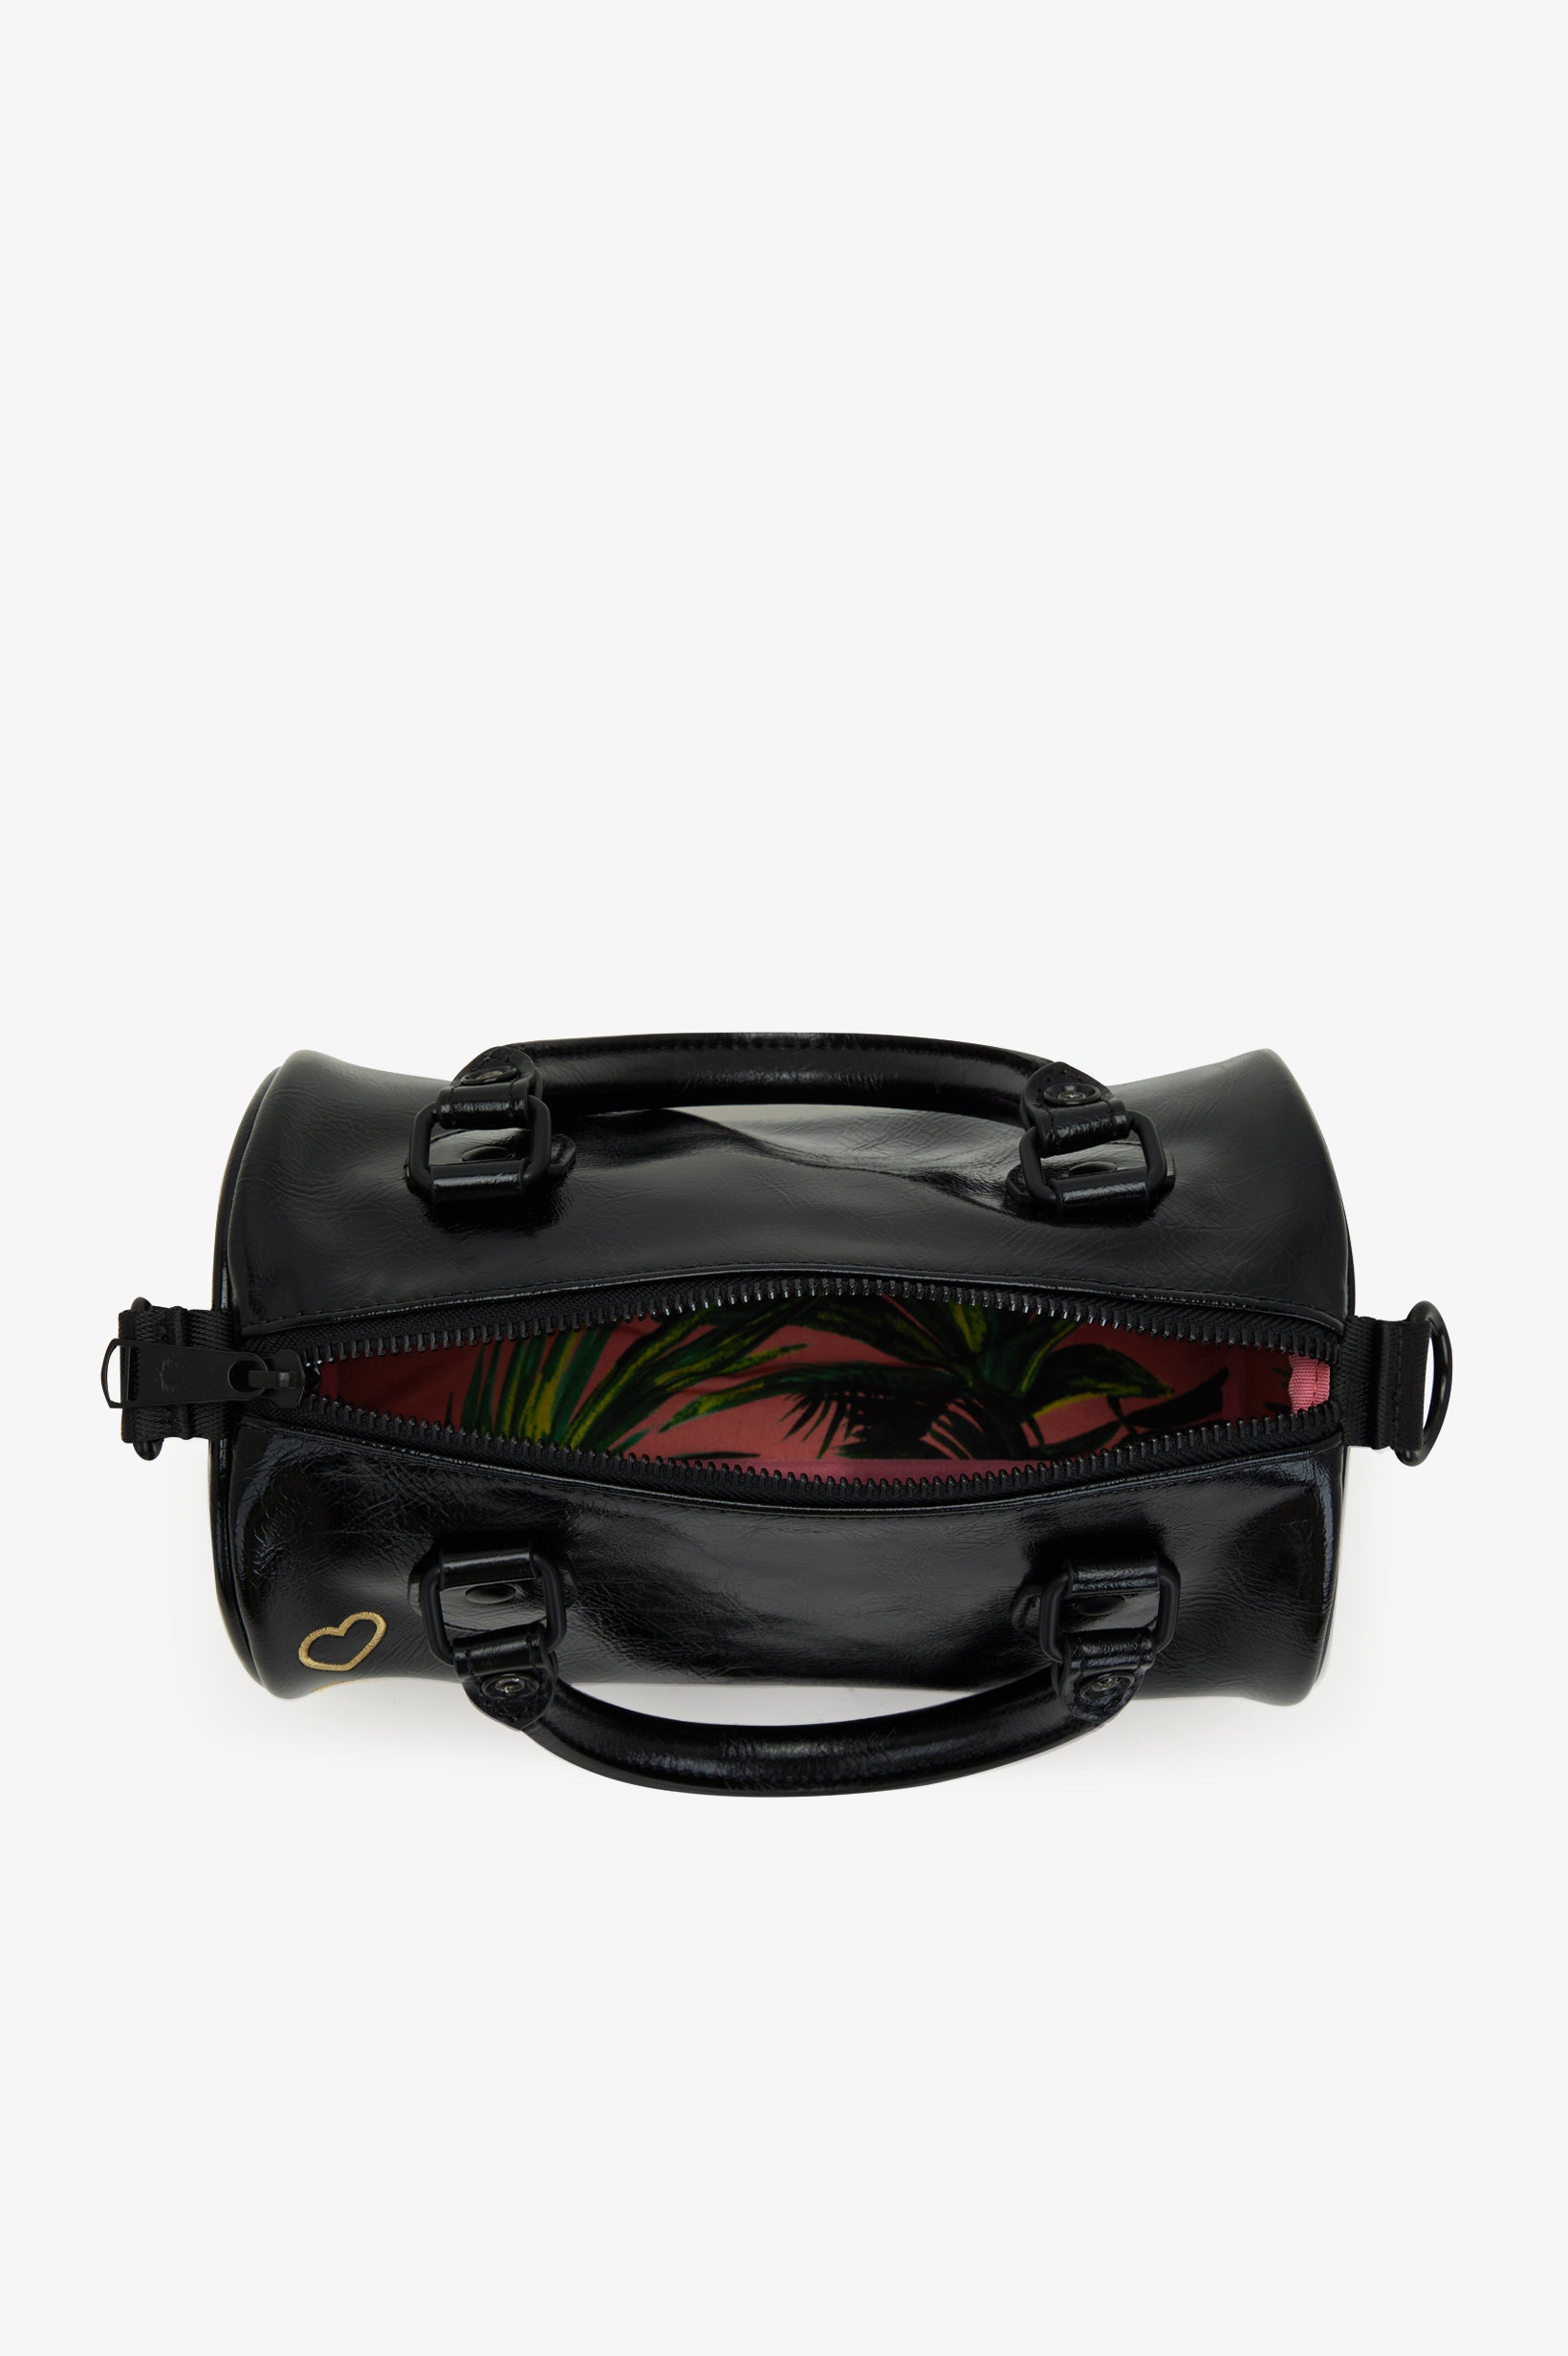 J Crew Barrel Bag Purse Shoulder Floral Leather Trim Chain Strap Mini | eBay